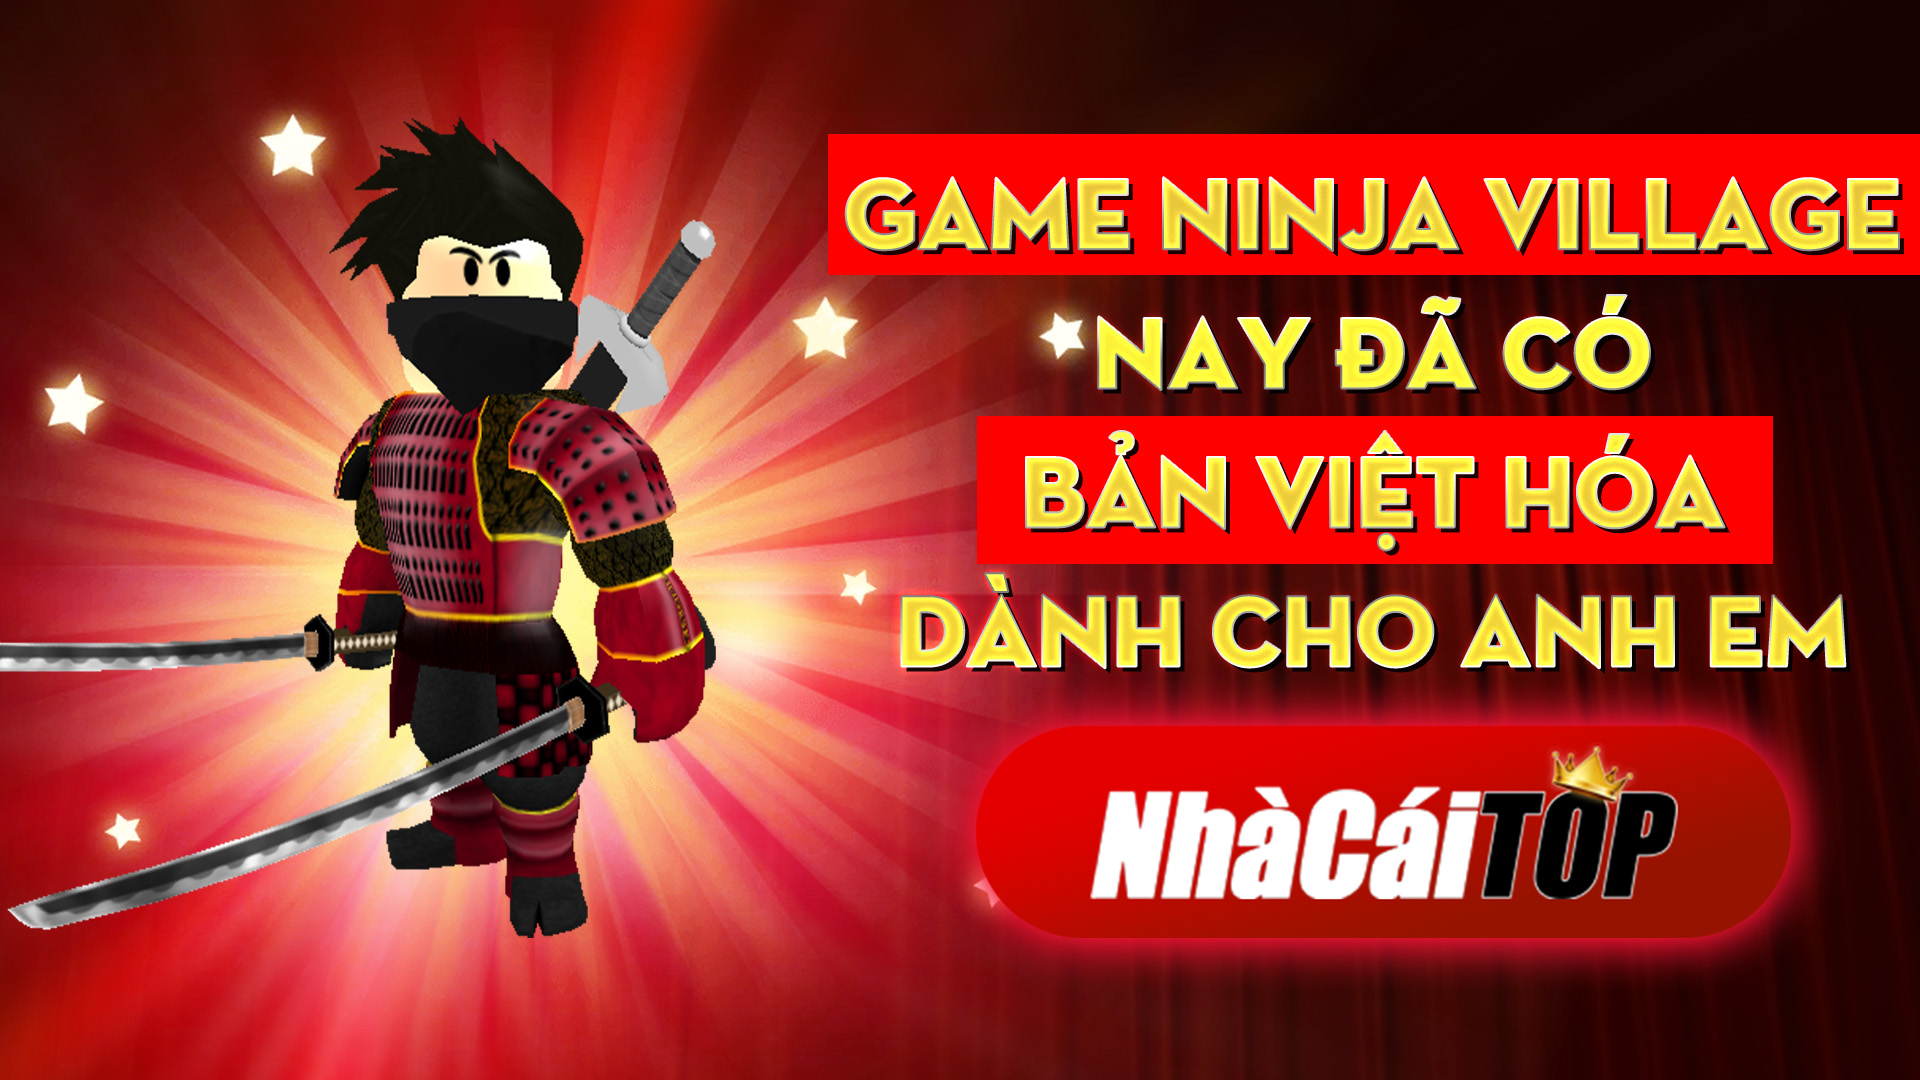 329 Game Ninja Village Nay Dja Co Ban Viet Hoa Danh Cho Anh Em